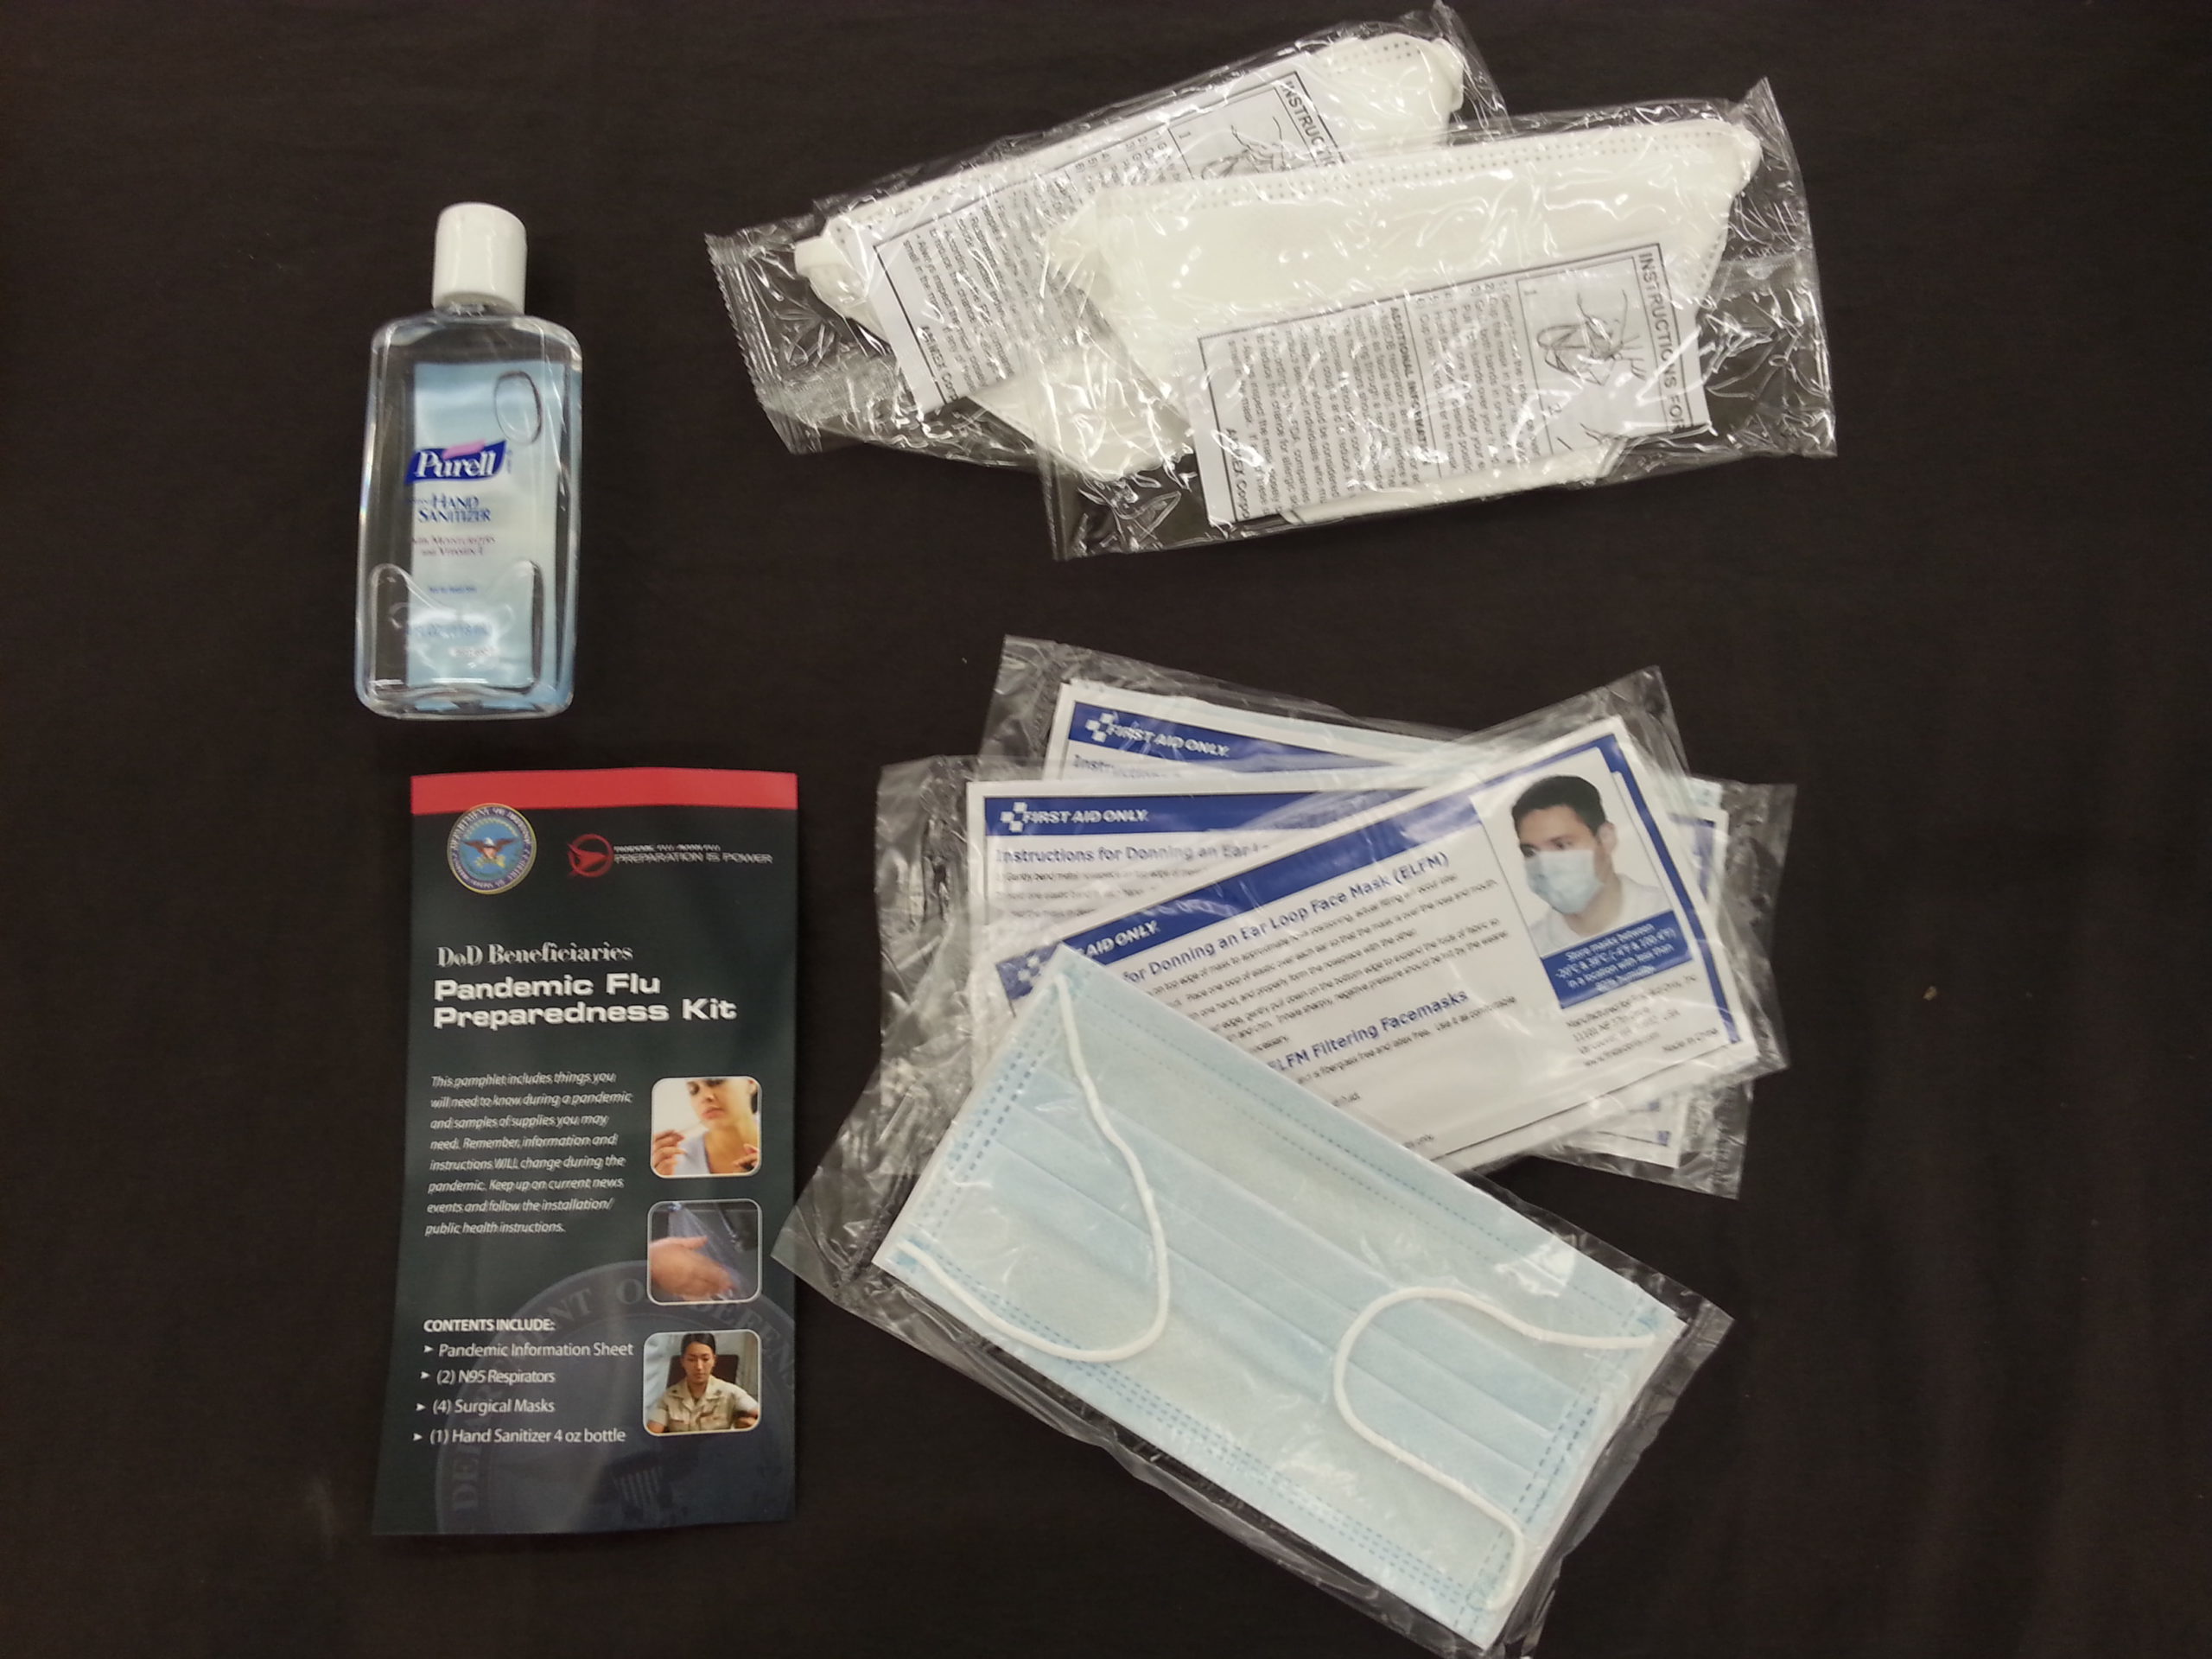 Full case of 21 Pandemic Flu Preparedness Kits